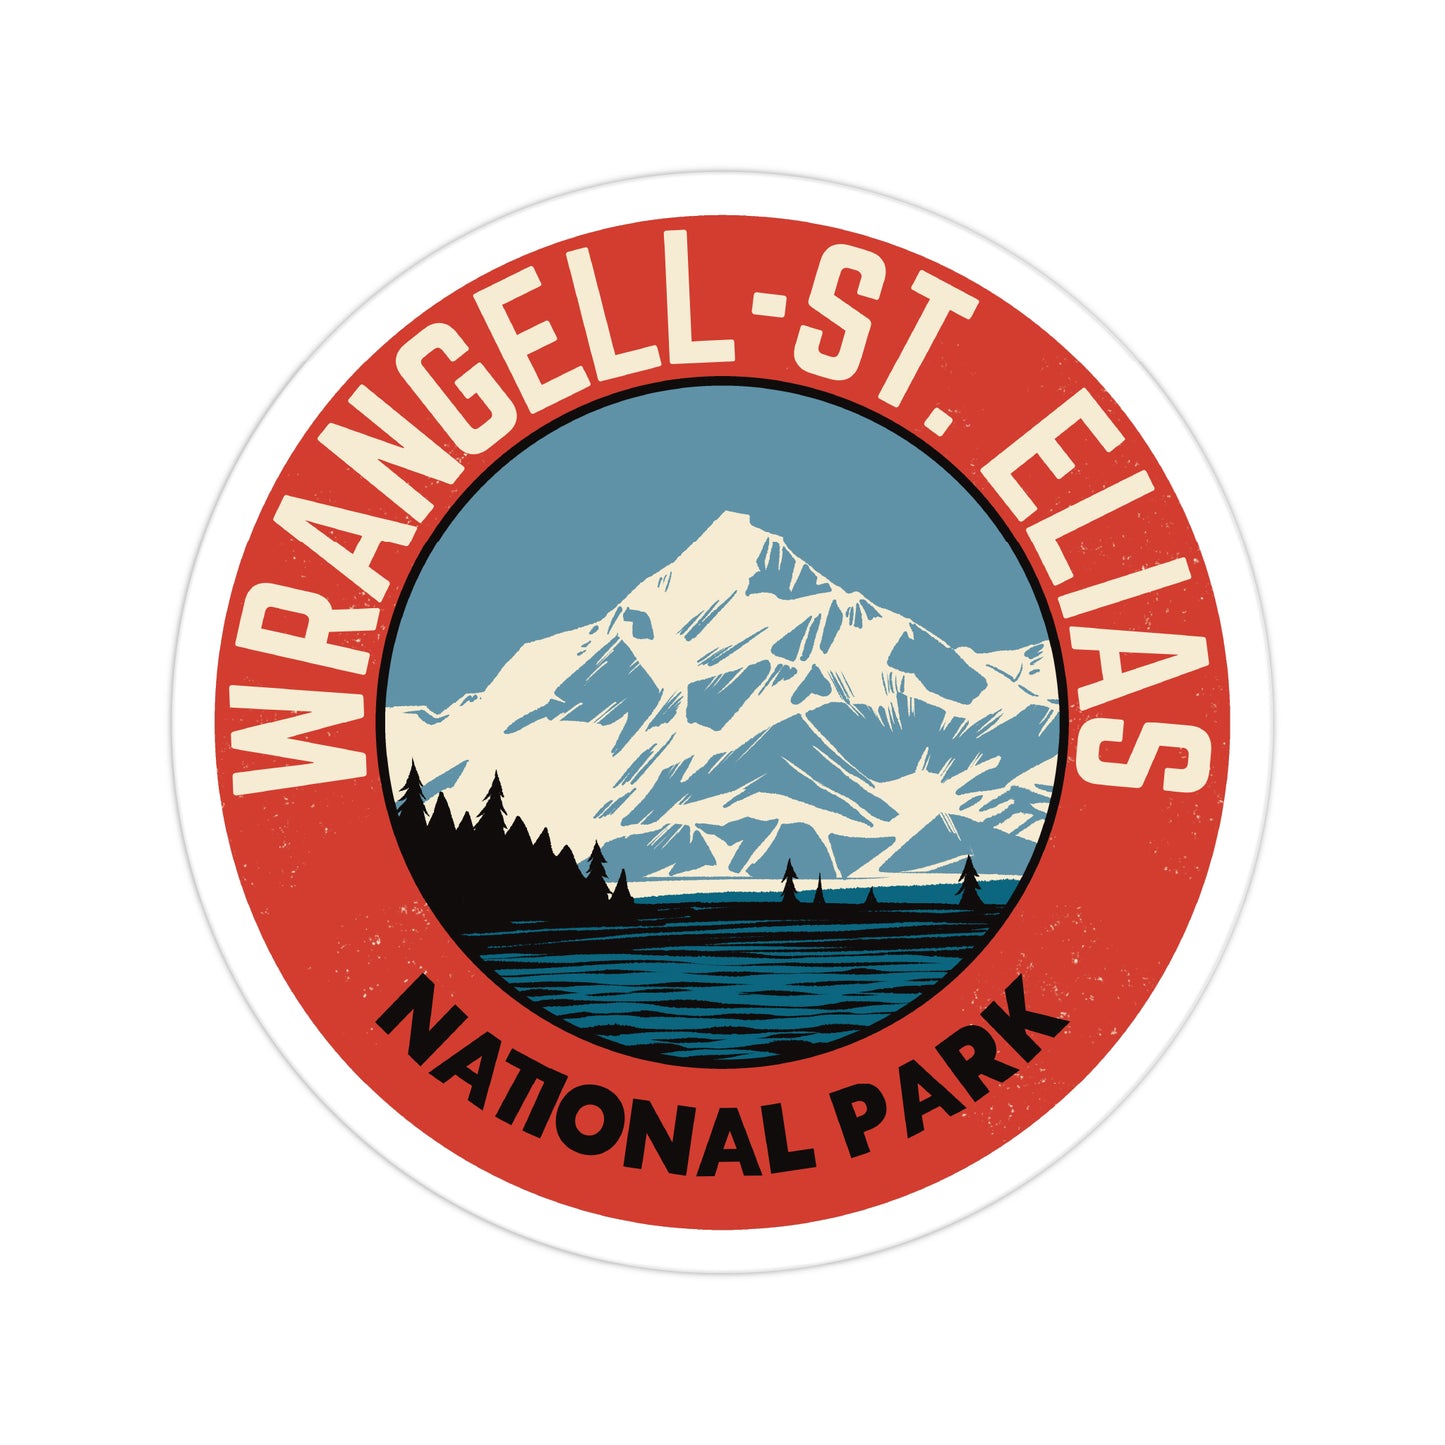 A sticker of Wrangell St Elias National Park